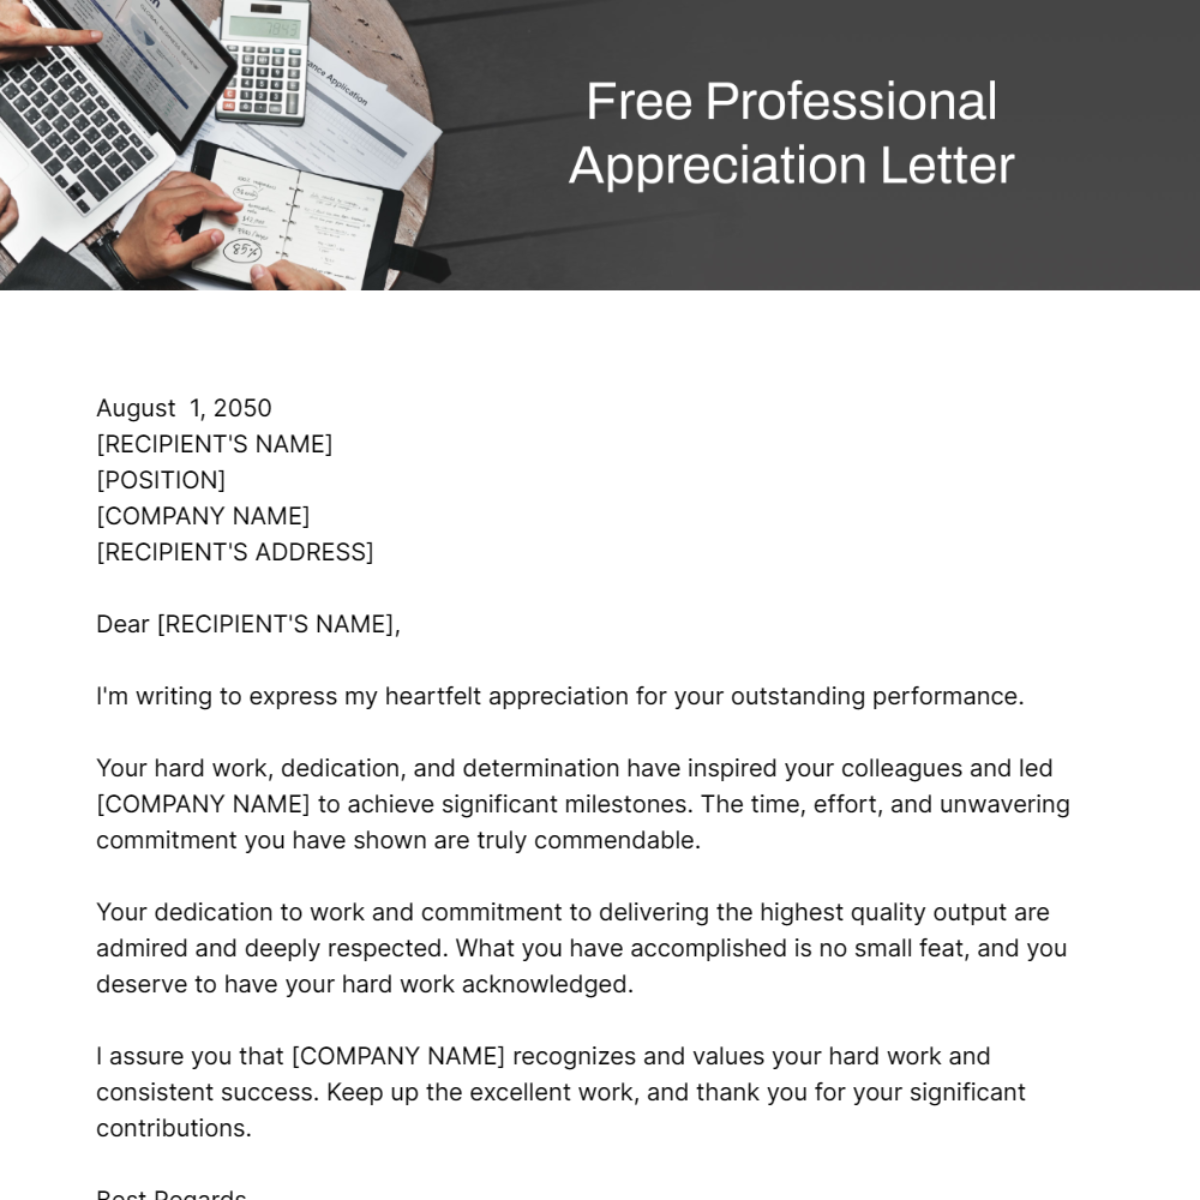 Professional Appreciation Letter Template